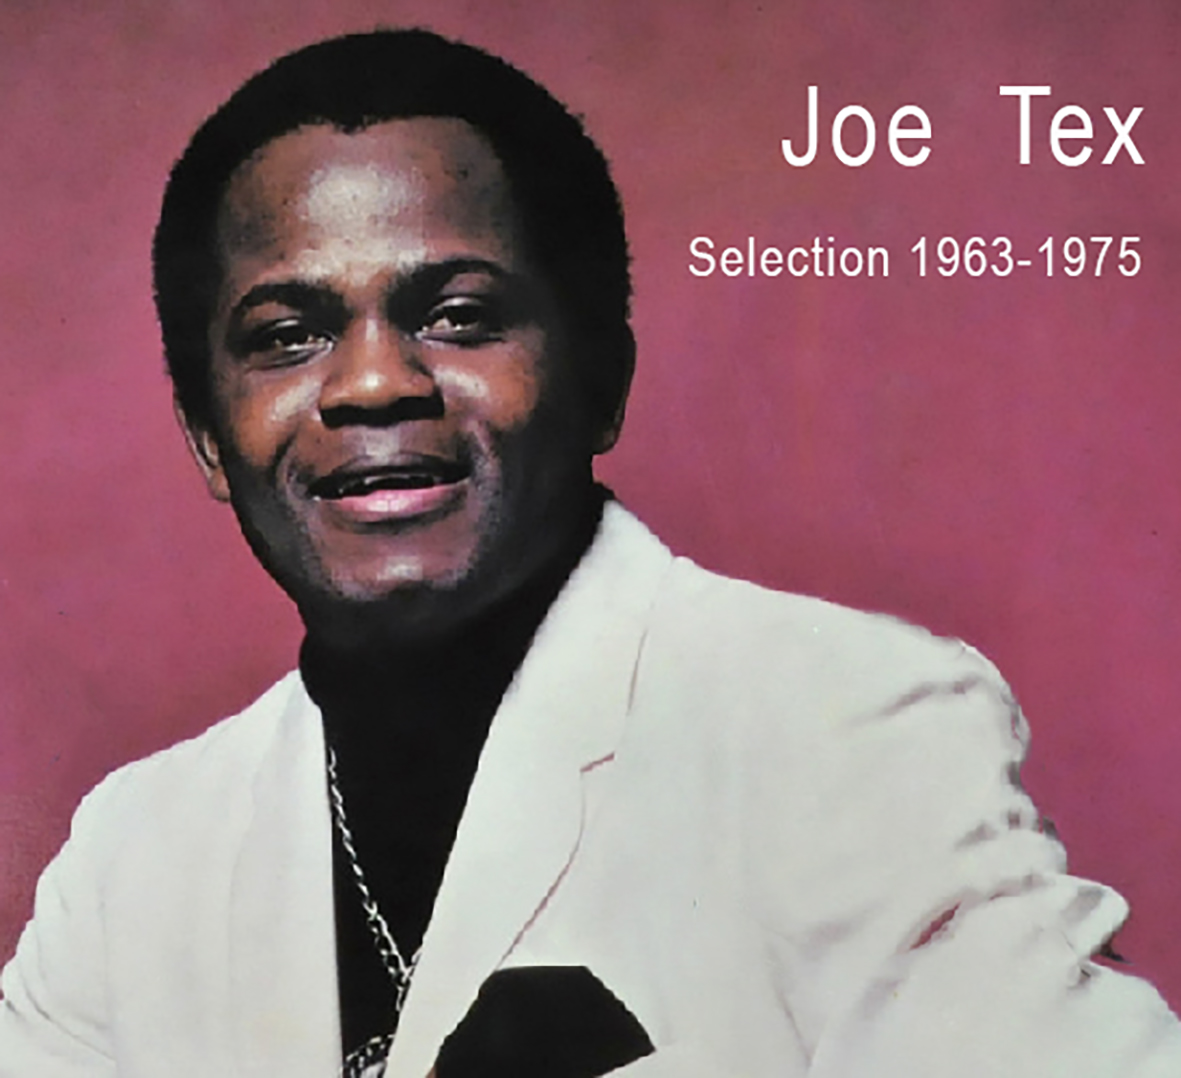 Joe Tex - Joe Tex - Selection 1963-1975